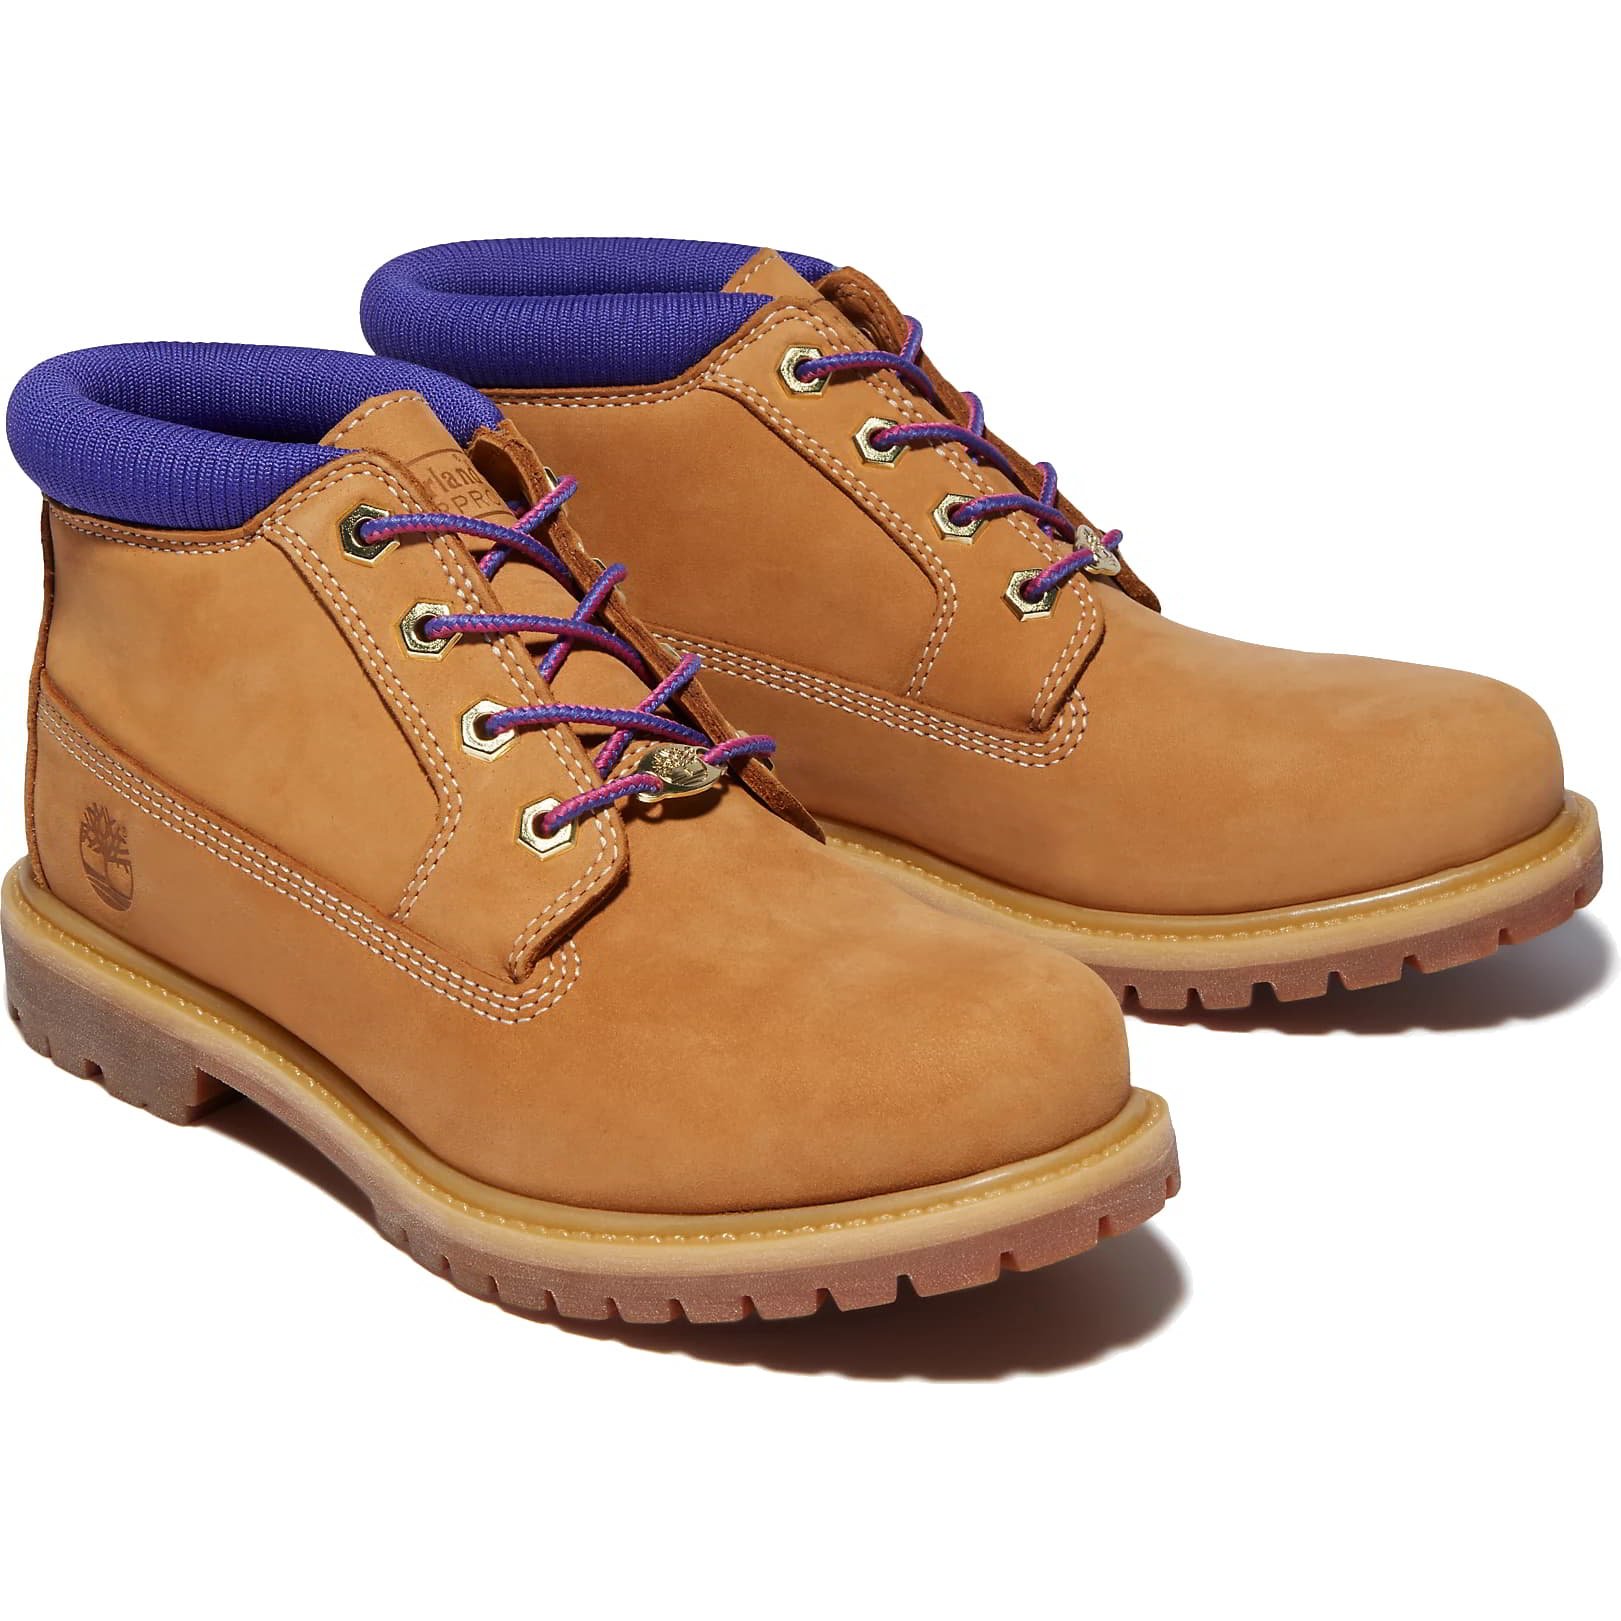 Timberland Women's Nellie Waterproof Desert Chukka Ankle Boots - UK 5.5